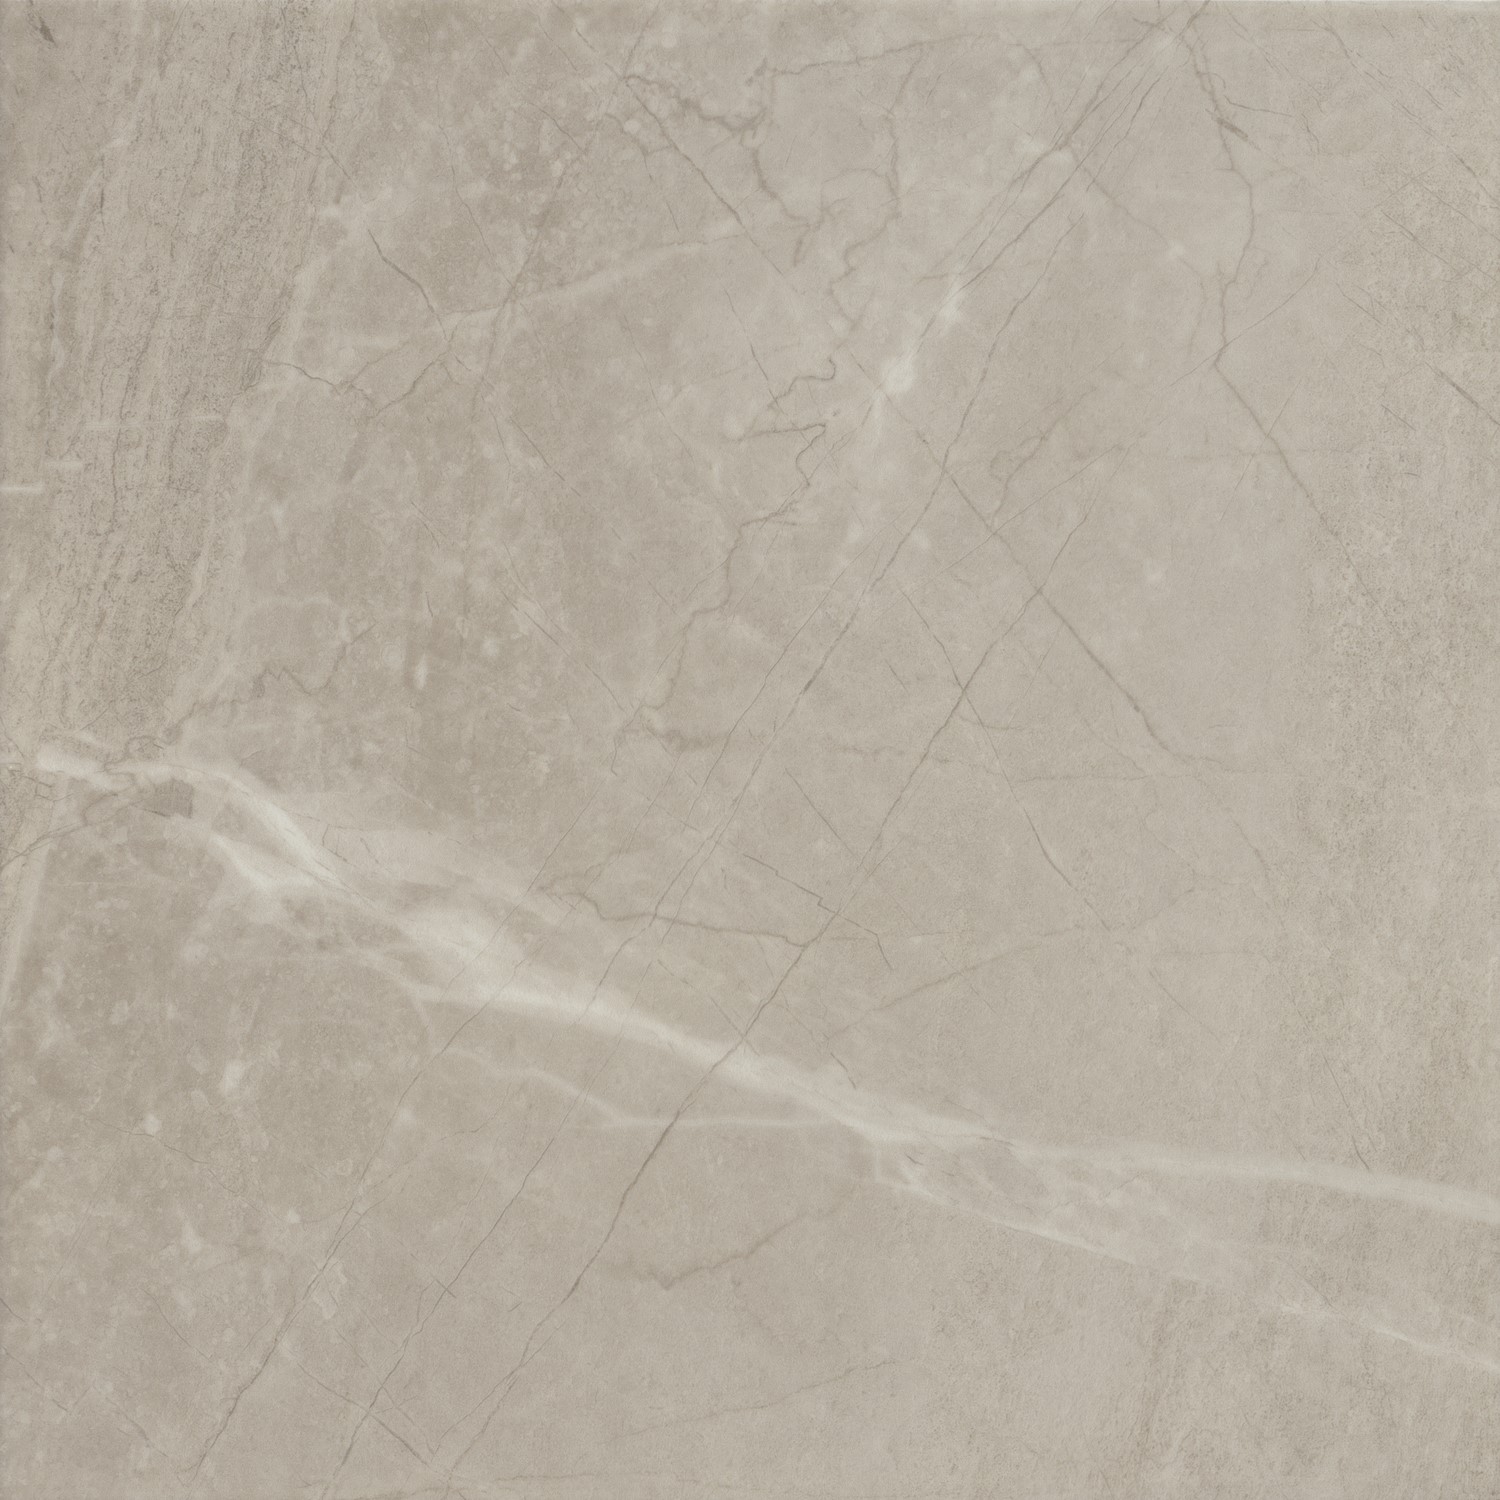 Dark Beige Marble Effect Floor Tile 33 x 33cm - Nata